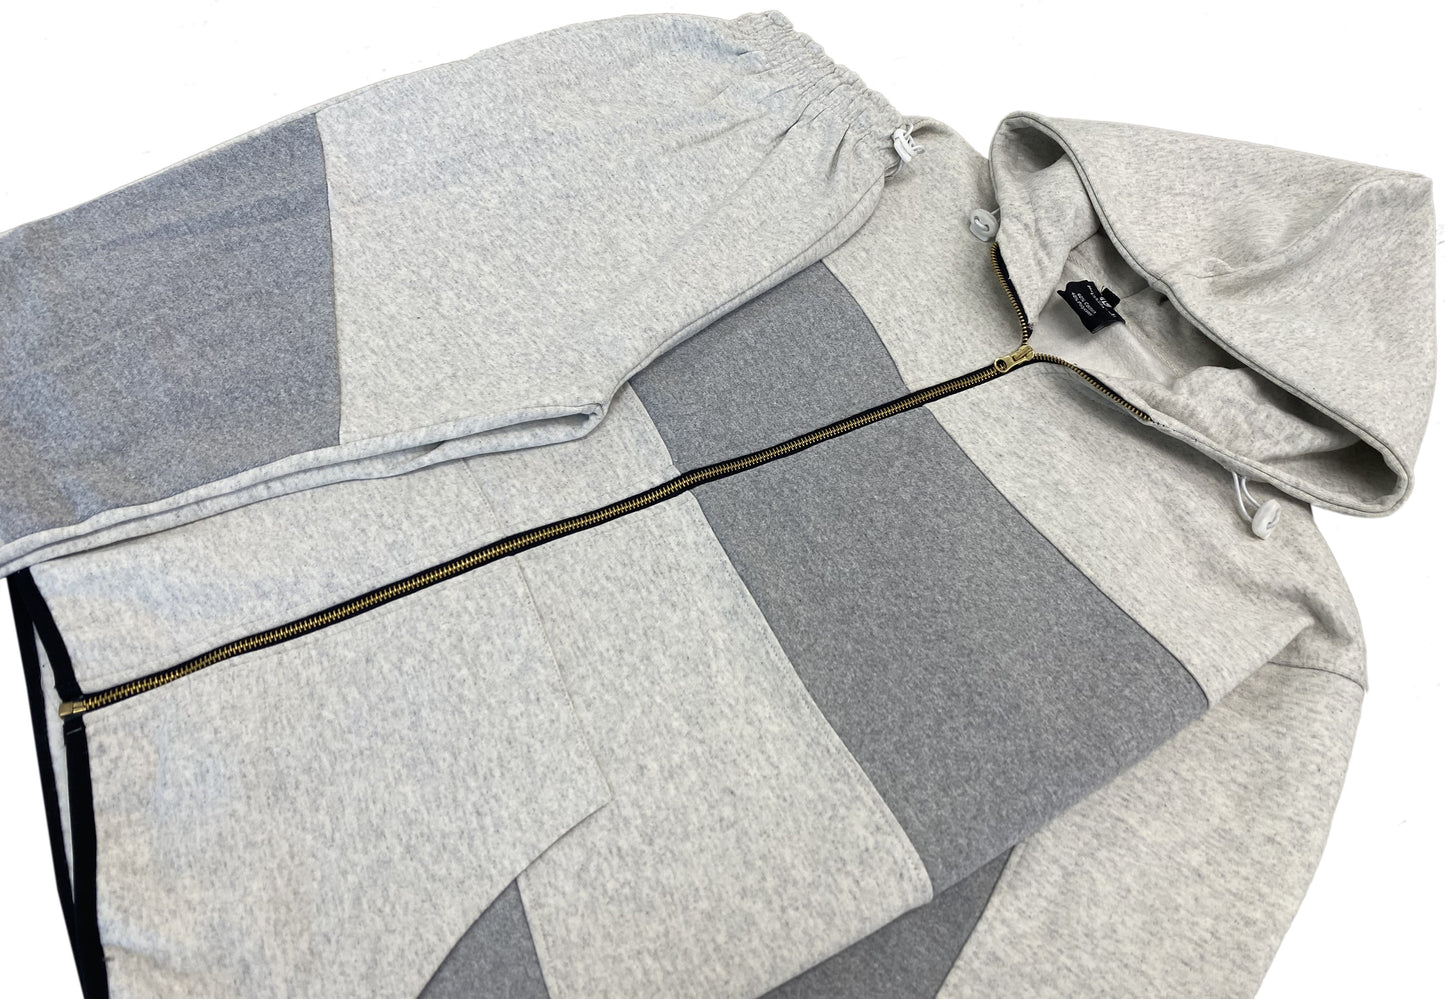 Royal Threads Canada Men’s Fashion hoodie Jogging Suit Premium quality Fleece Hoodie with matching fleece pants